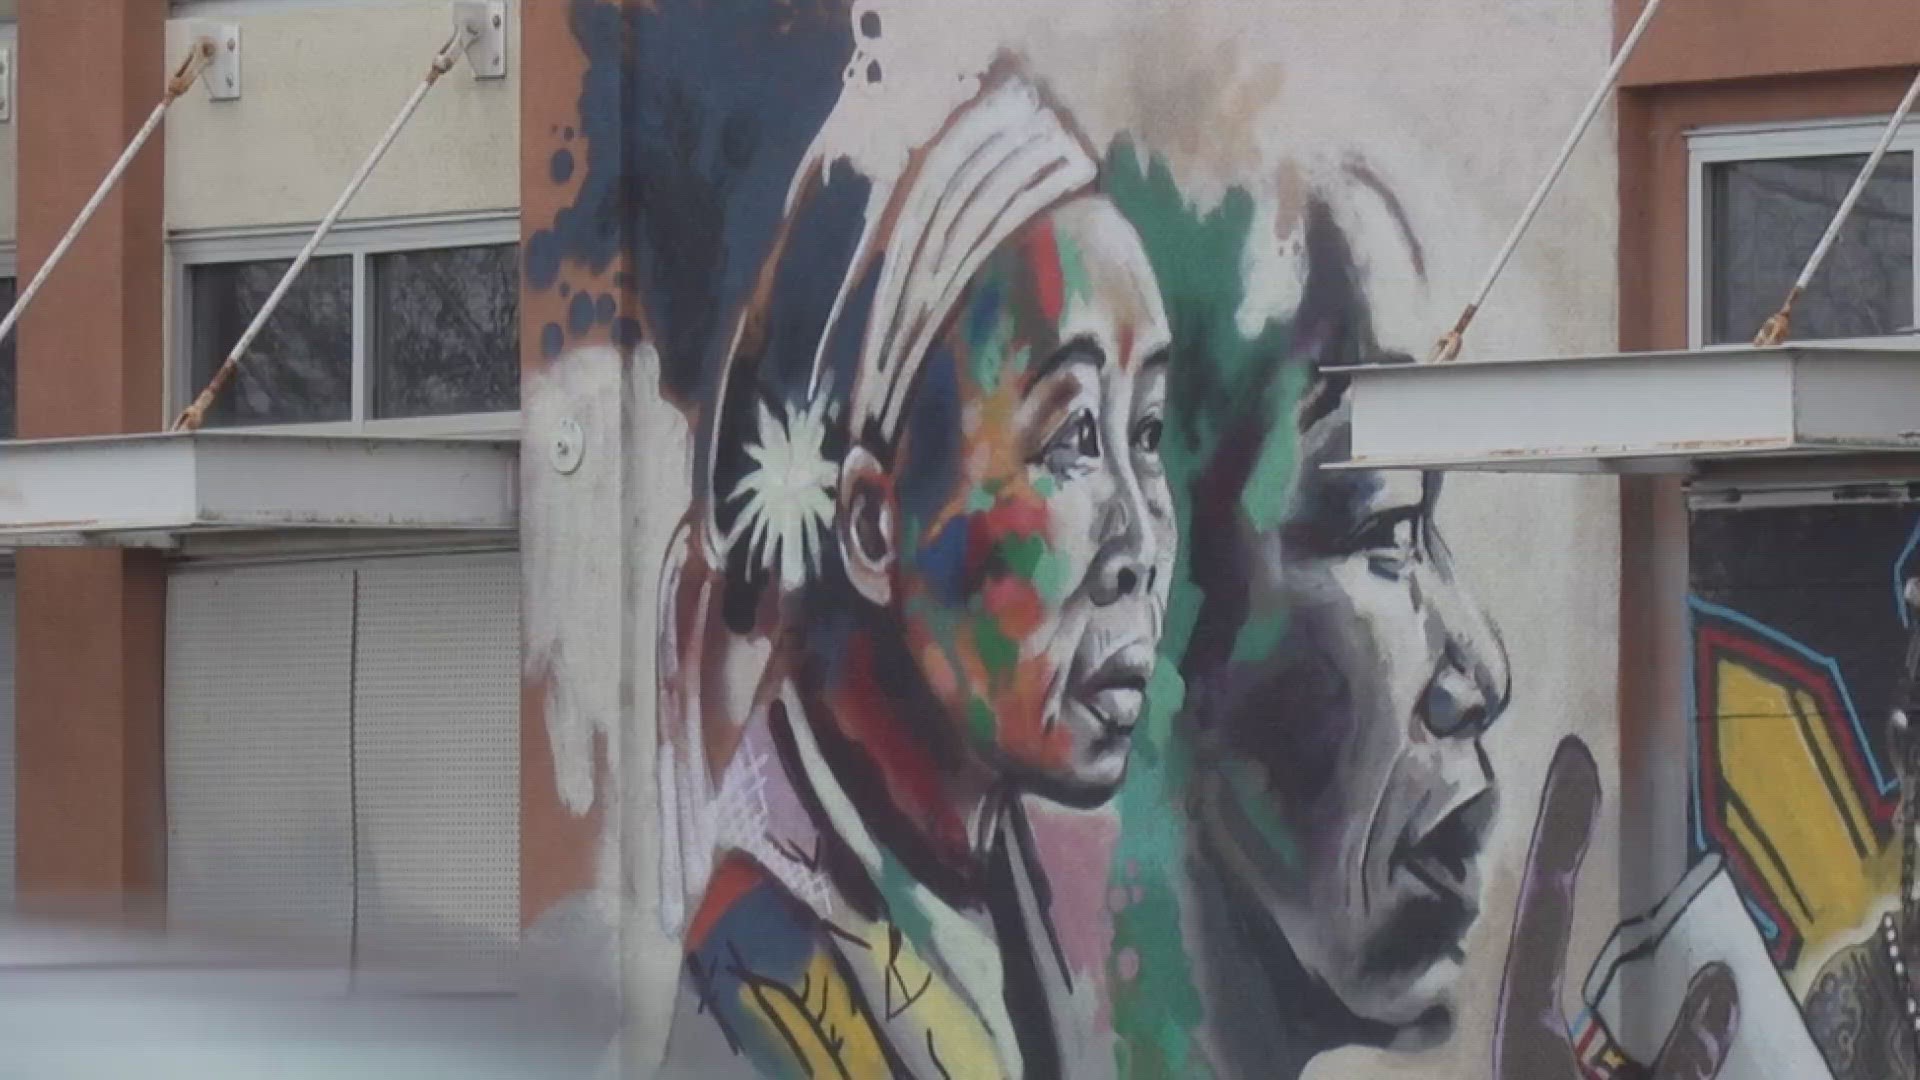 New mural in Sacramento's Little Saigon draws criticism online